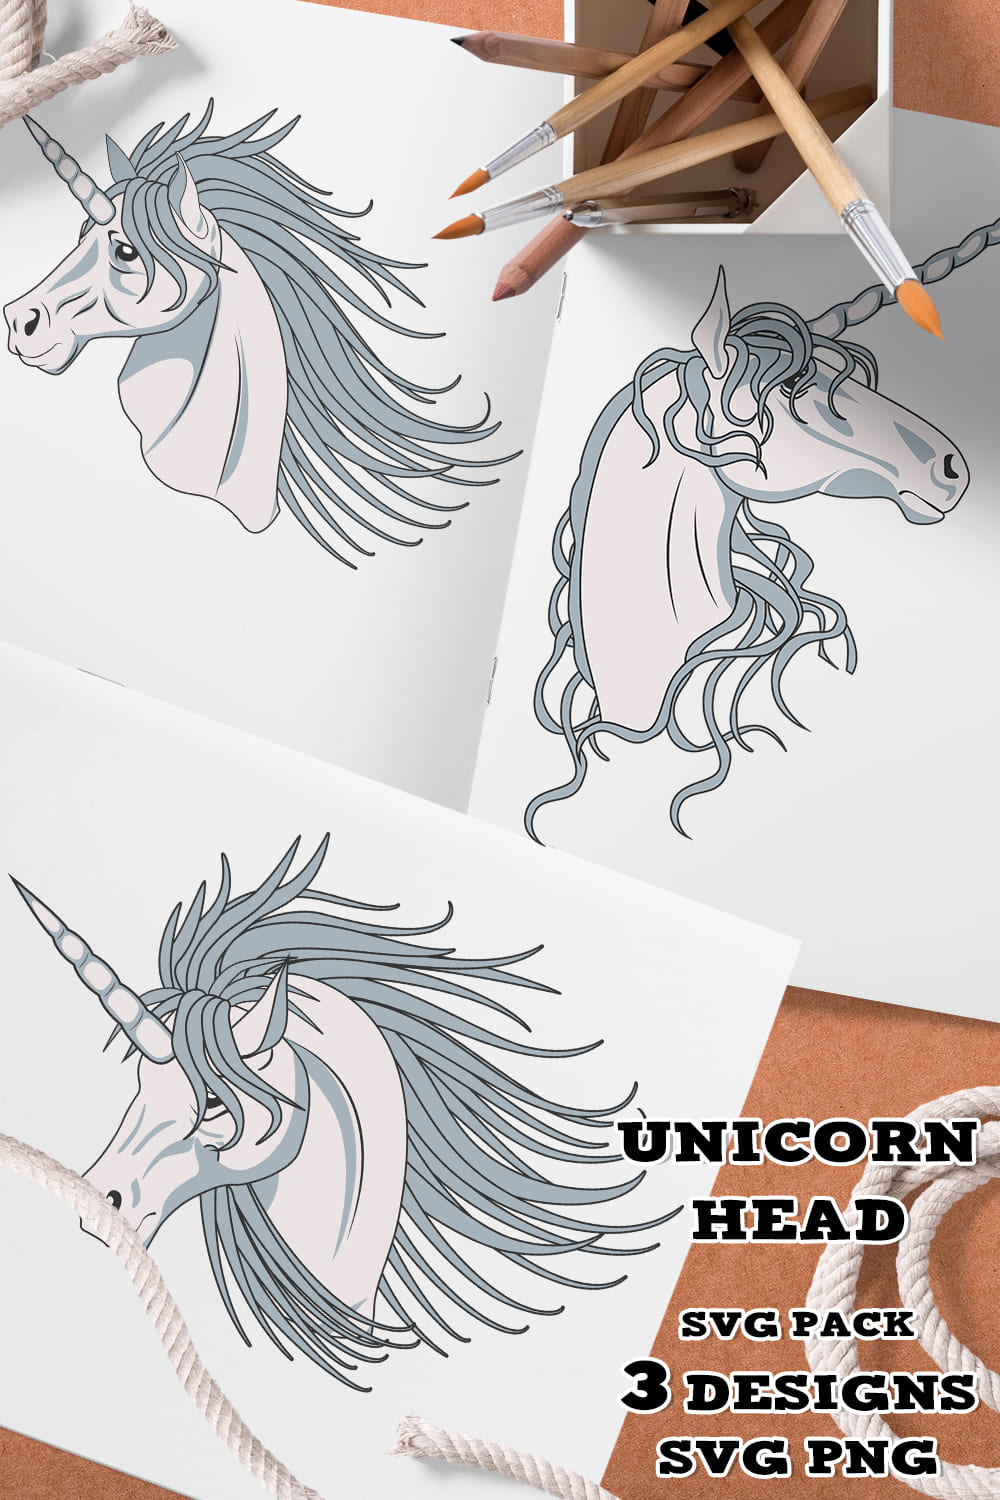 Unicorn Head SVG - pinterest image preview.